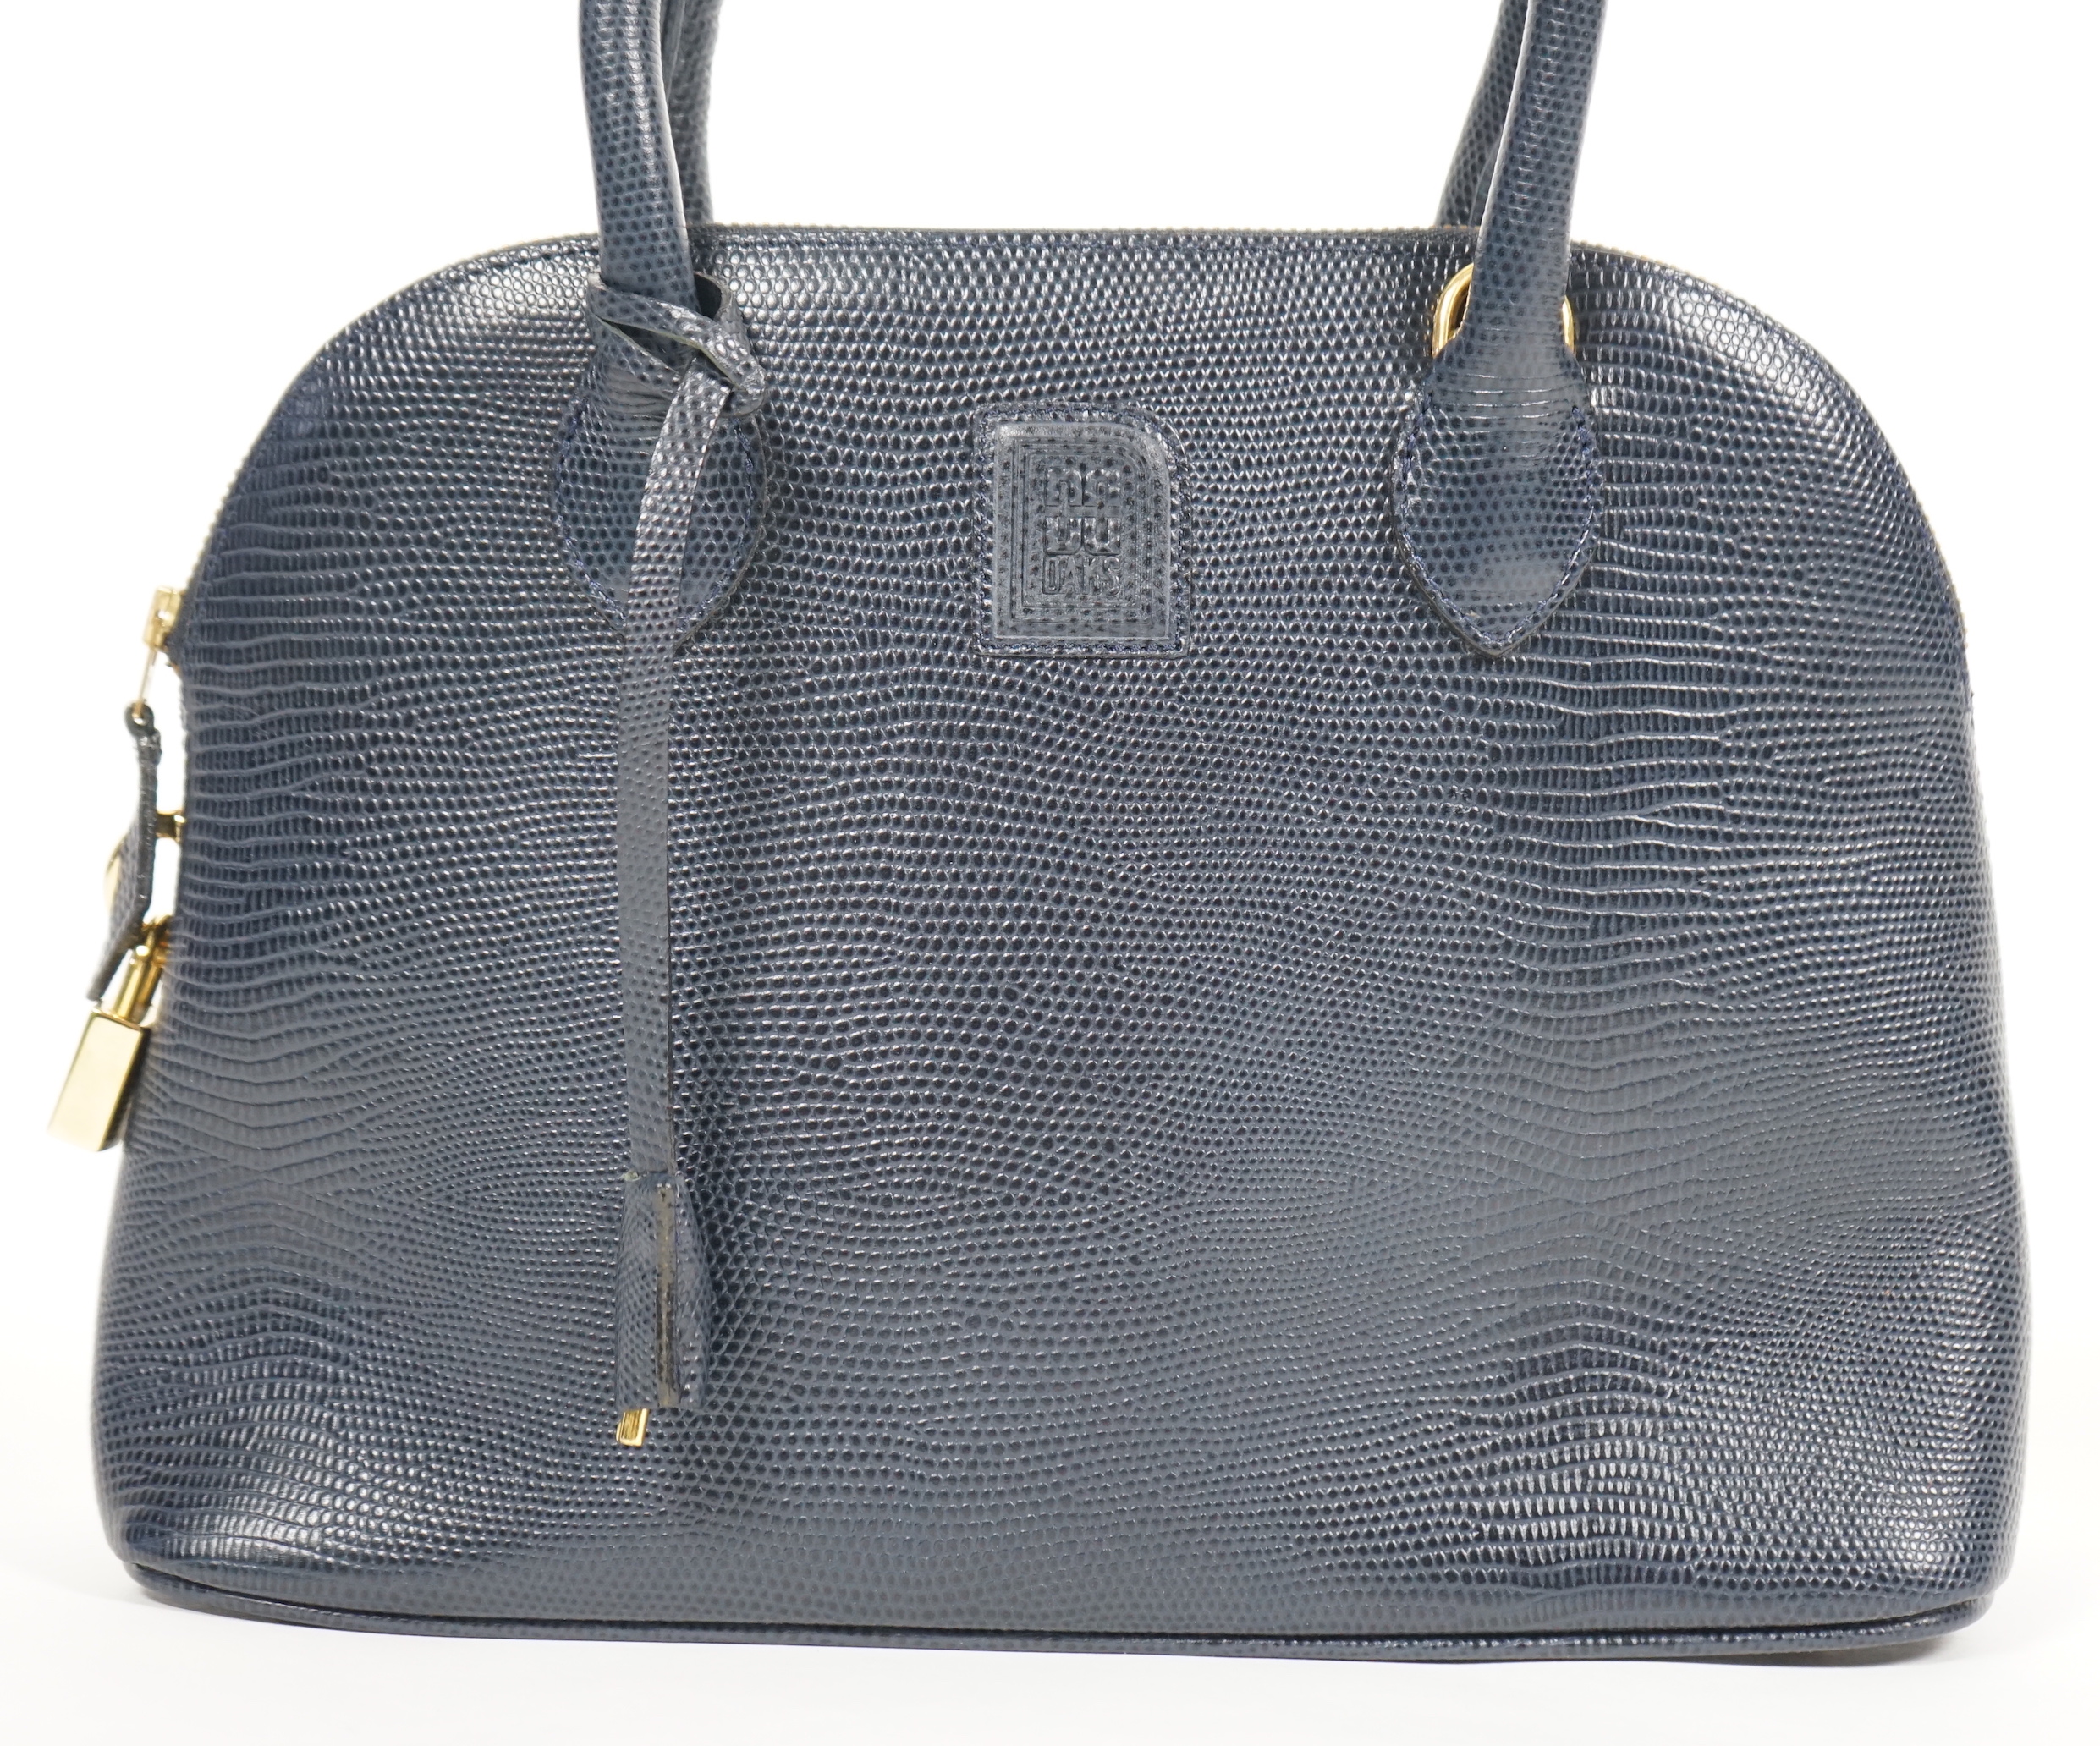 A Daks London blue faux lizard effect leather handbag with detachable shoulder strap, width 30cm, height 21cm, height to handles 30cm